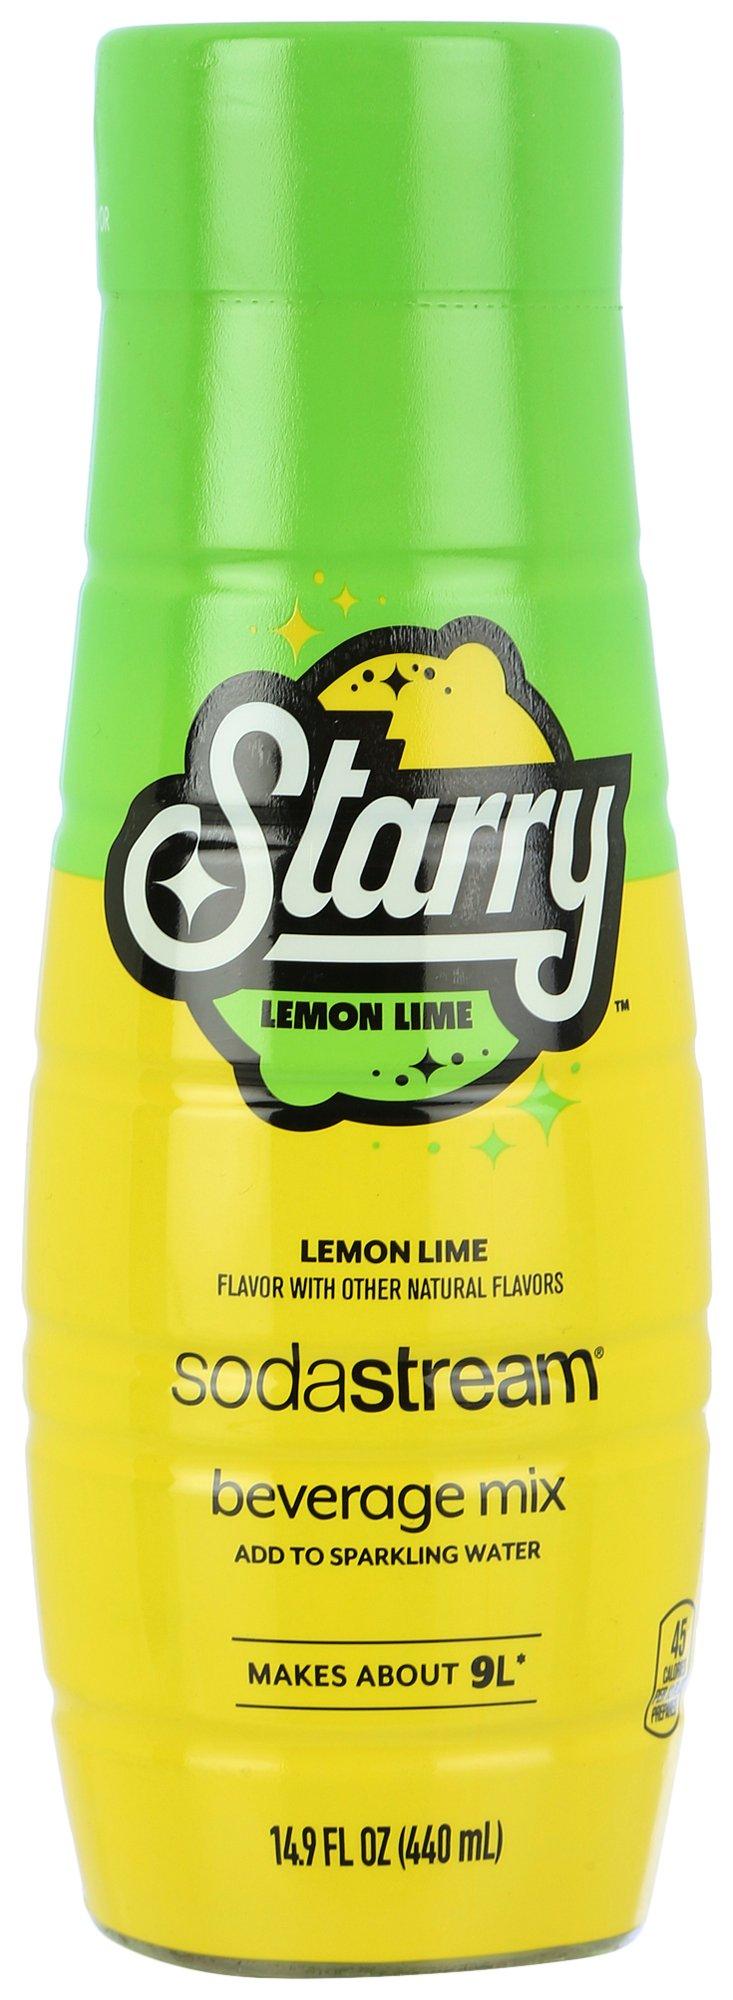 Sodastream Starry Lemon Lime Mix